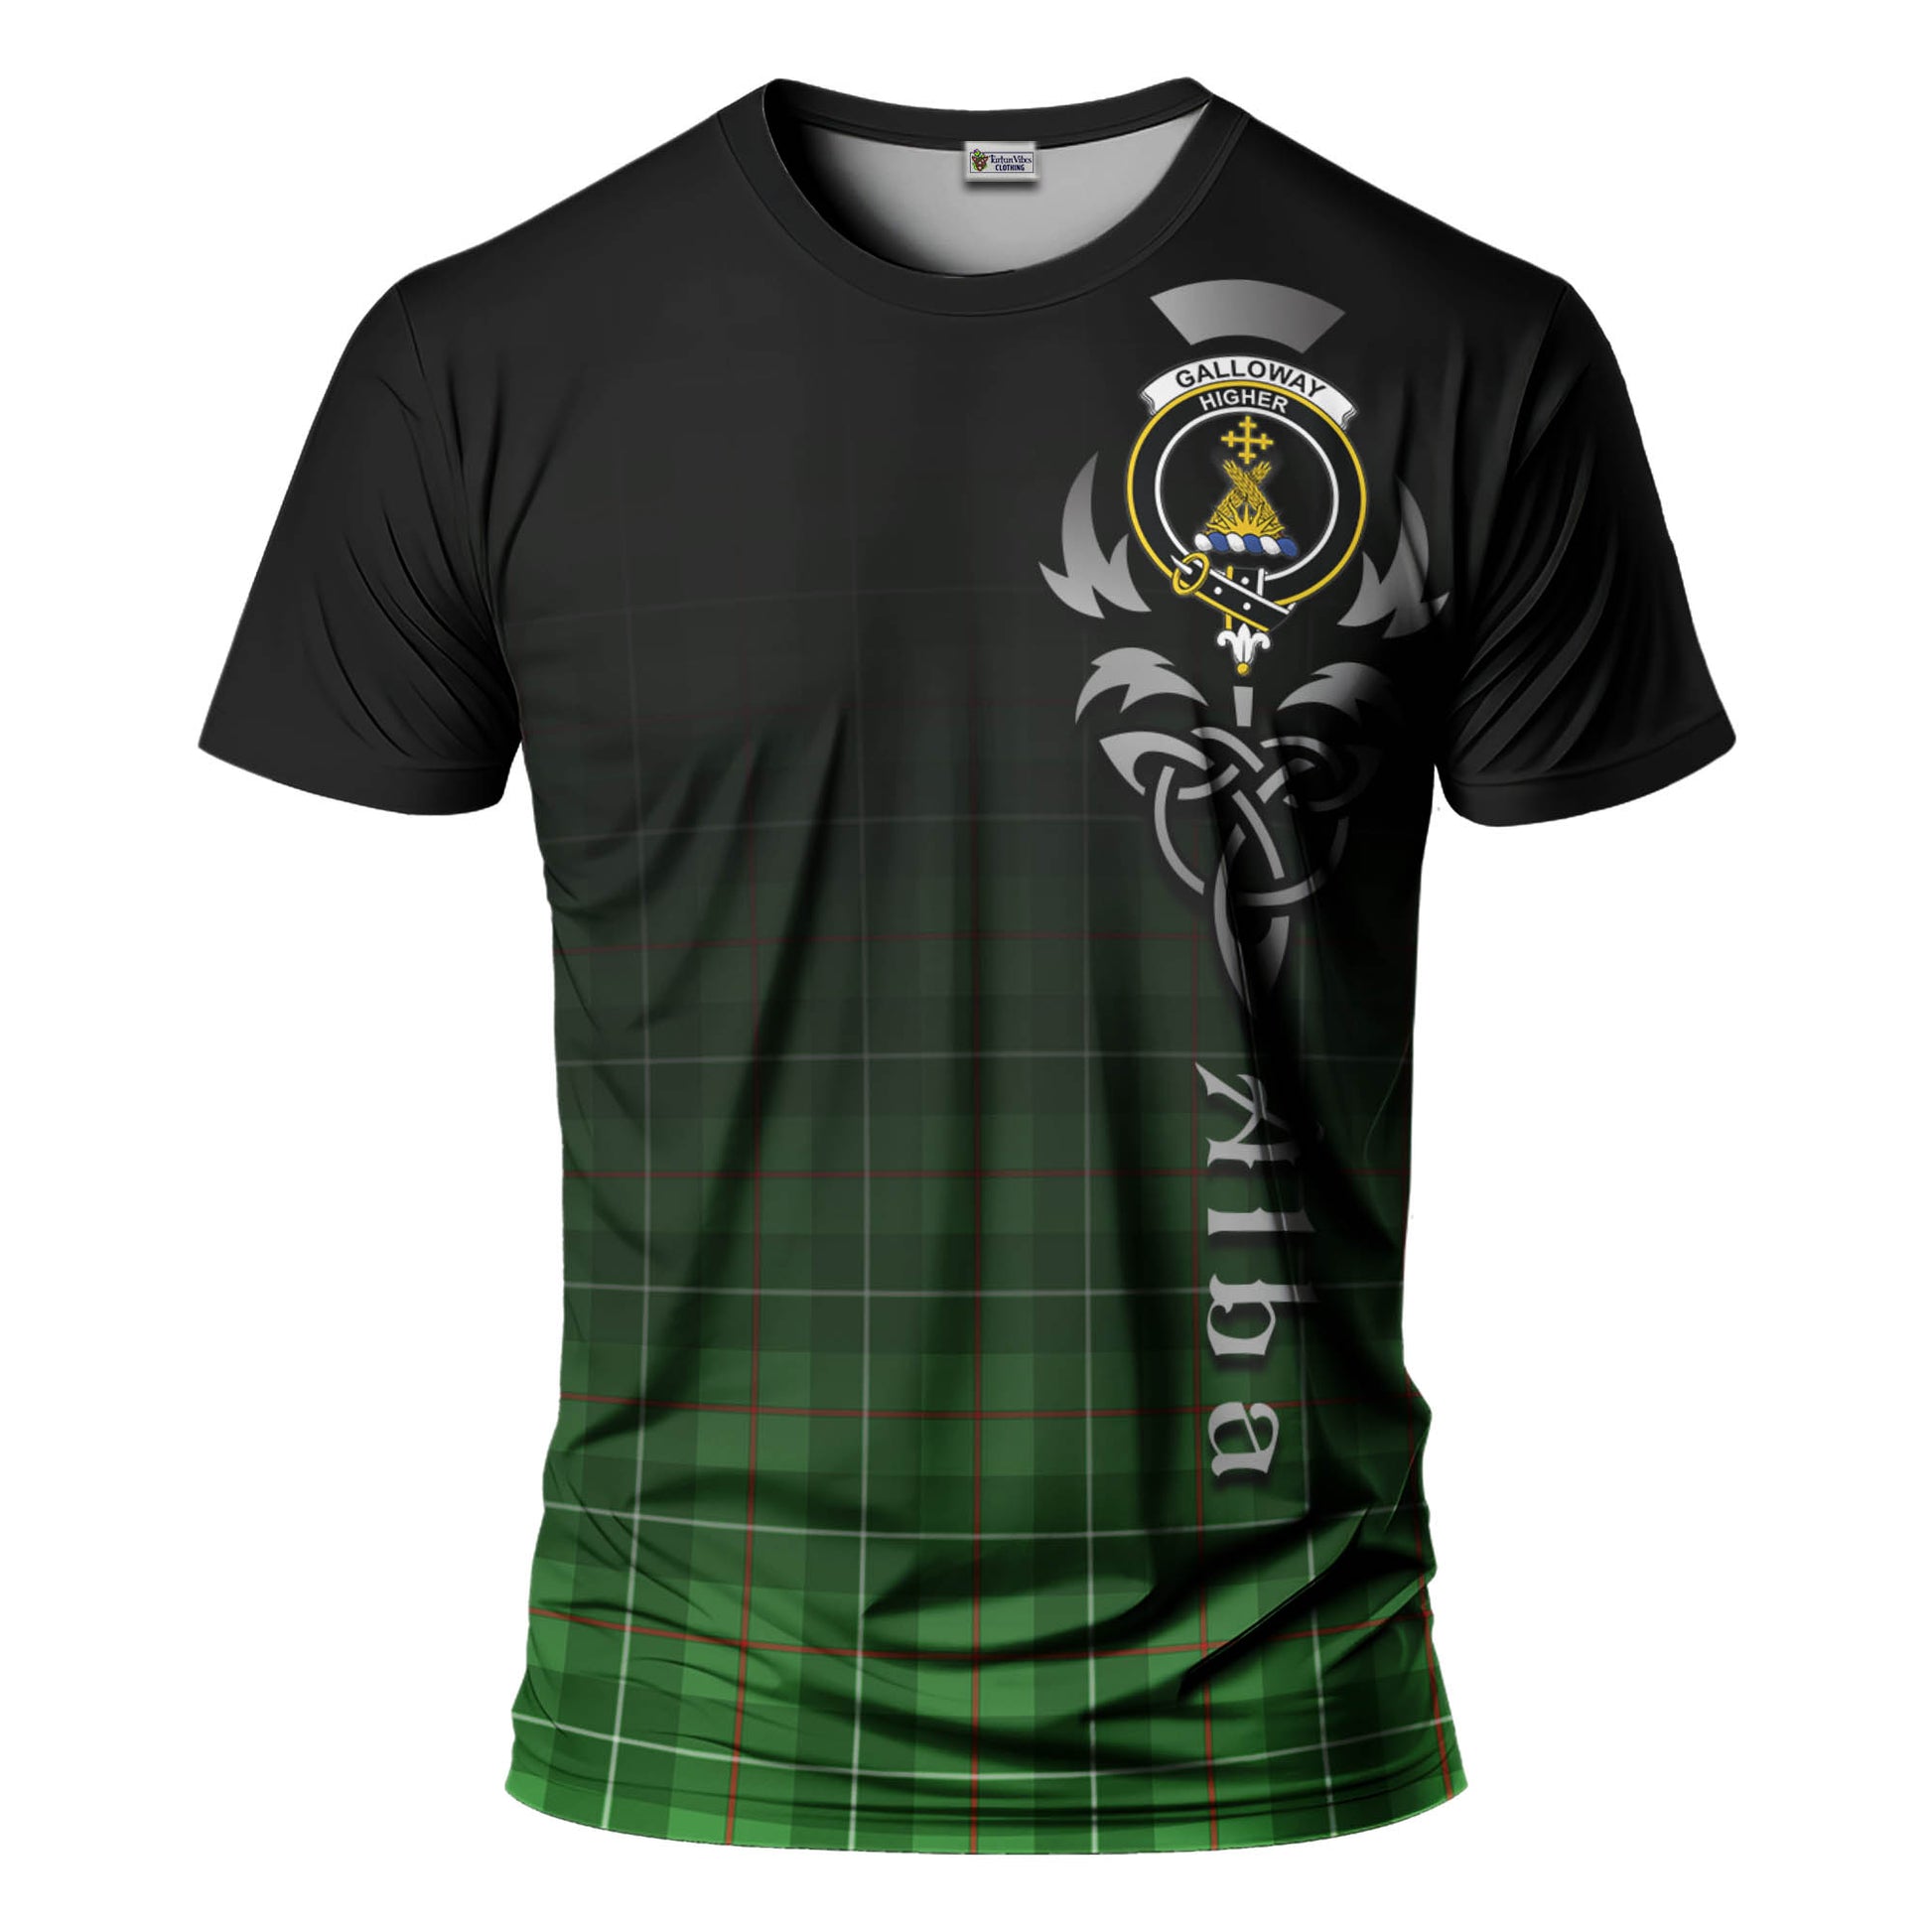 Tartan Vibes Clothing Galloway Tartan T-Shirt Featuring Alba Gu Brath Family Crest Celtic Inspired